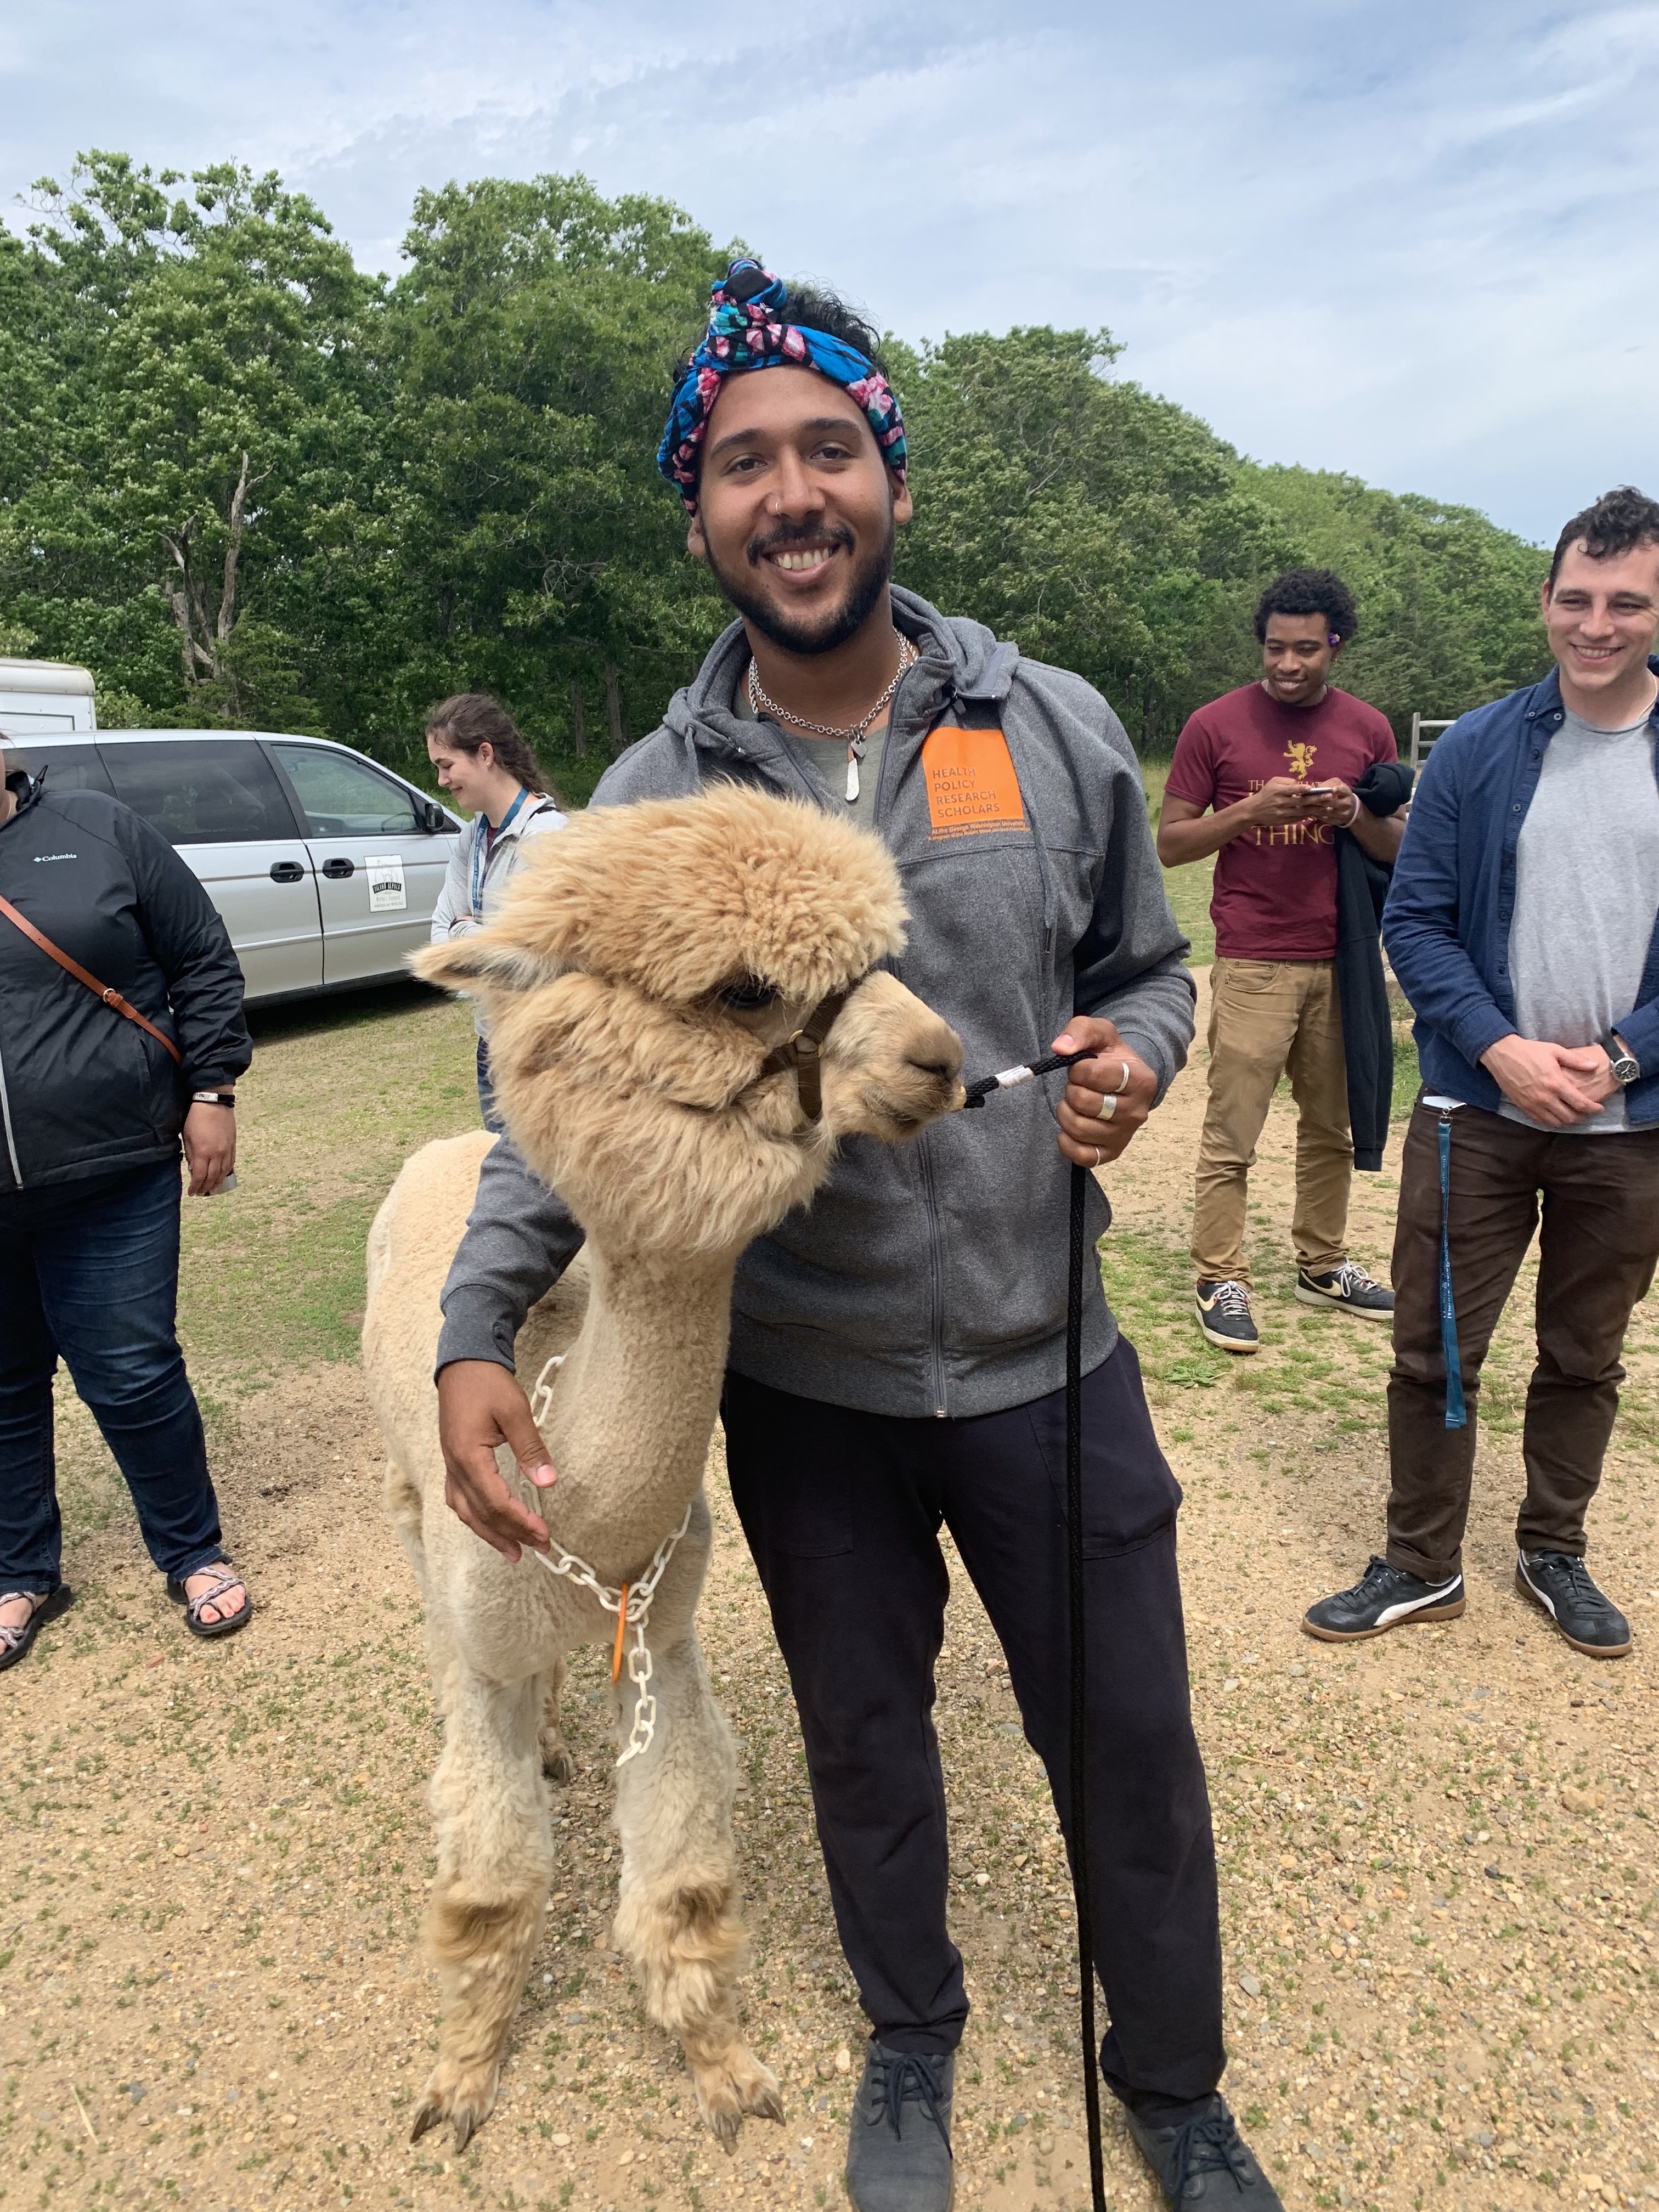 Michael standing next to a alpaca